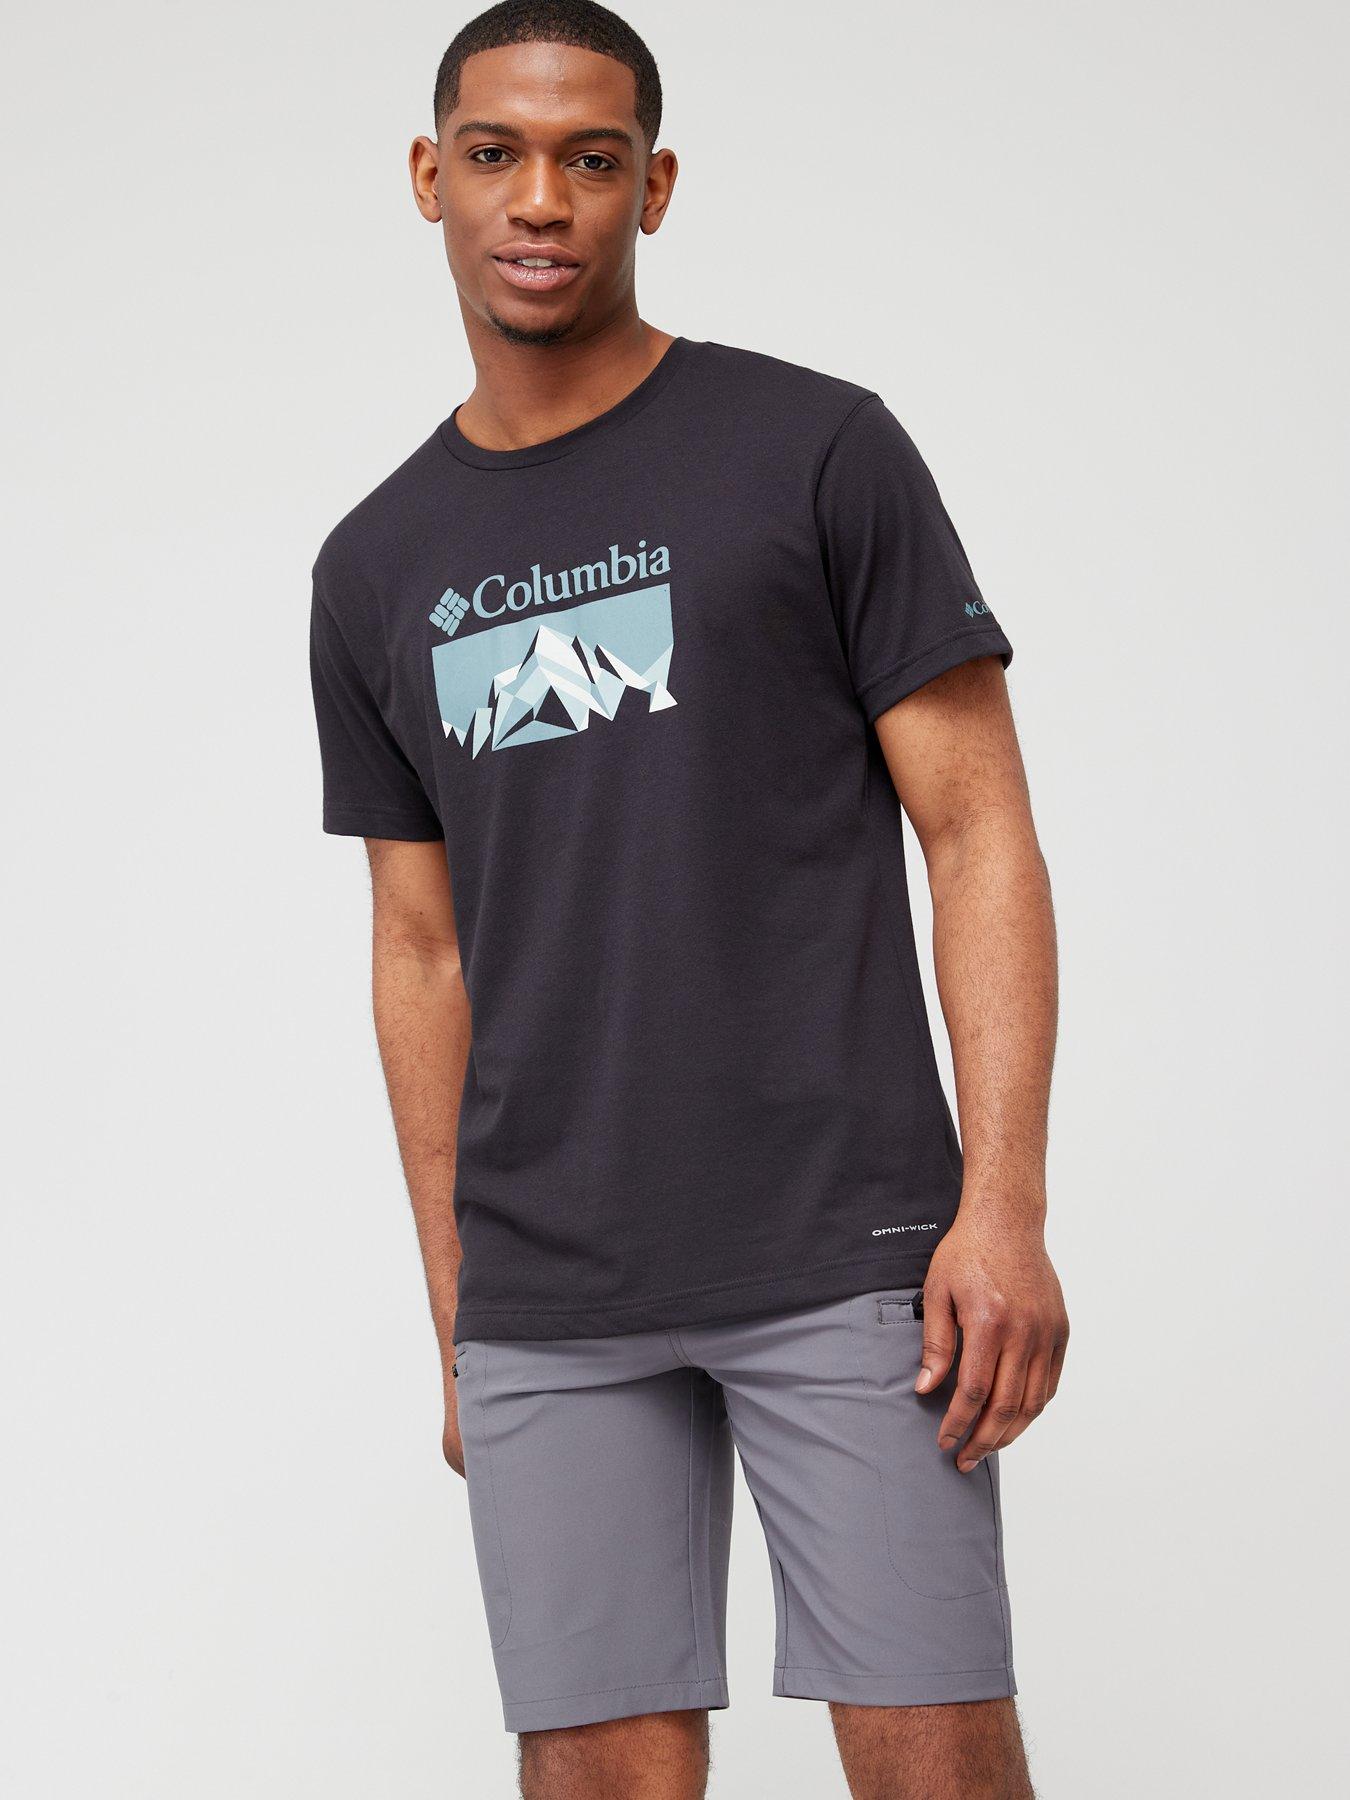 Columbia Men's Thistletown Hills Short Sleeve T-Shirt